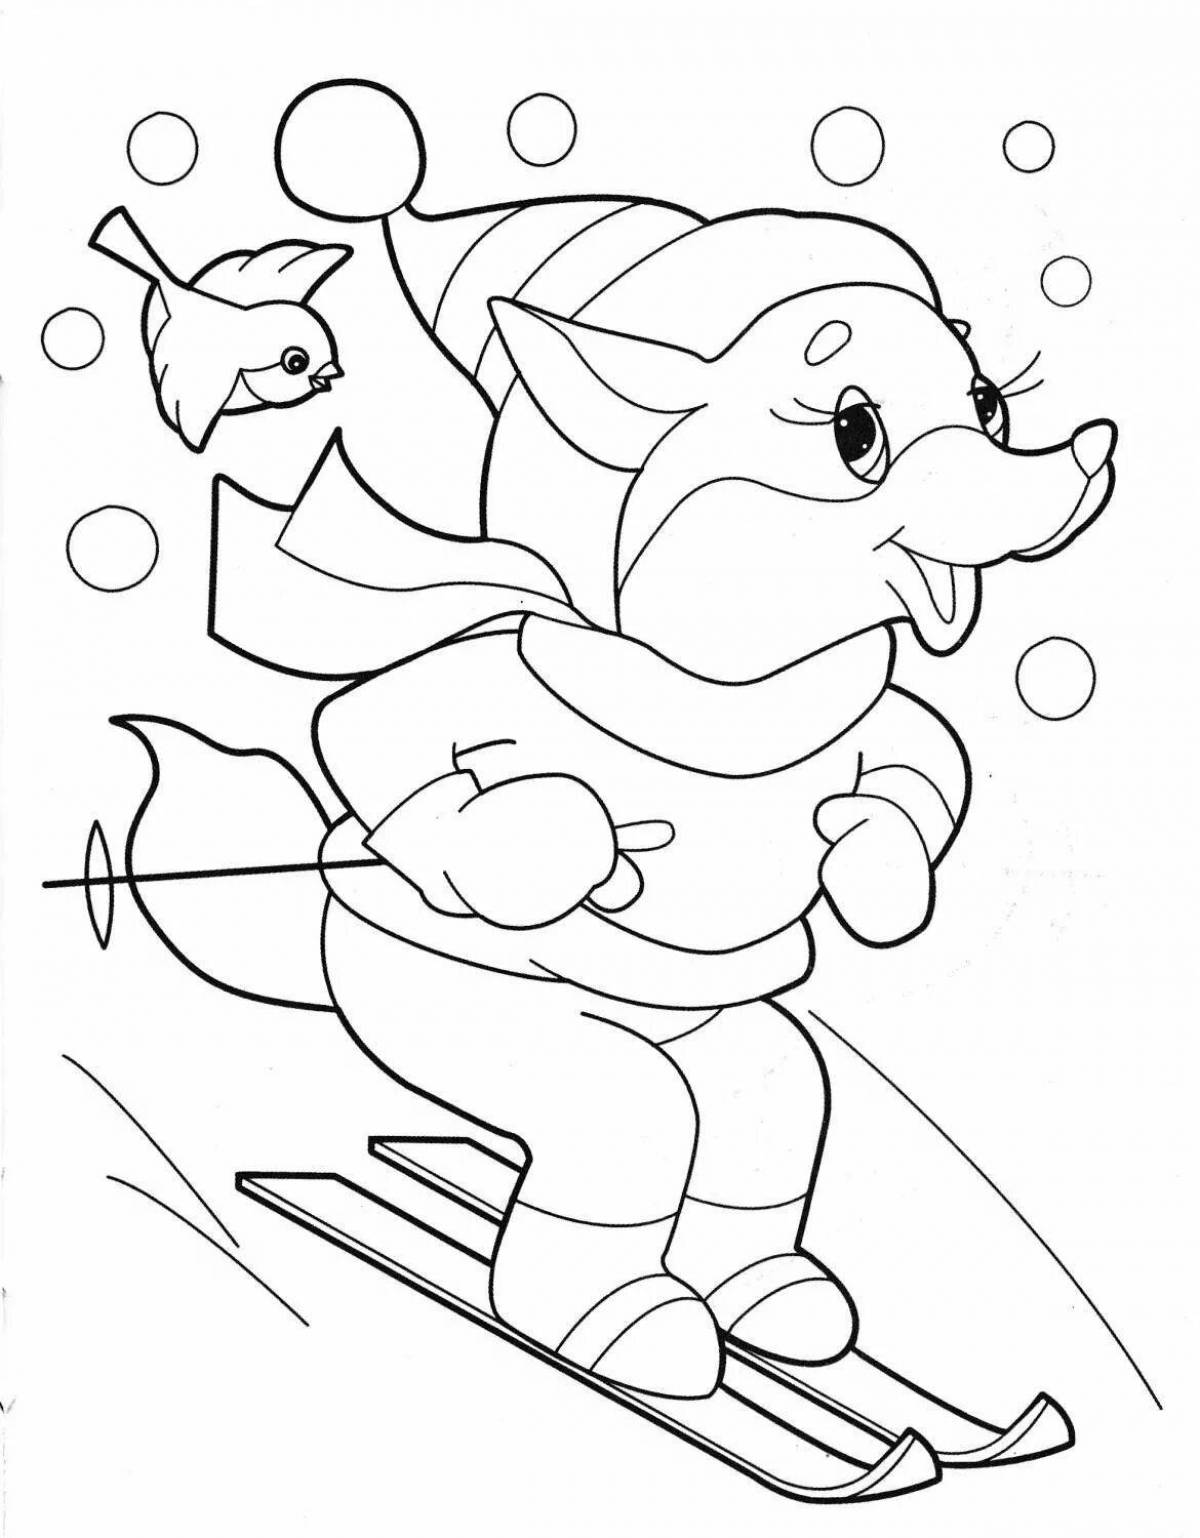 Adorable bear skiing coloring page